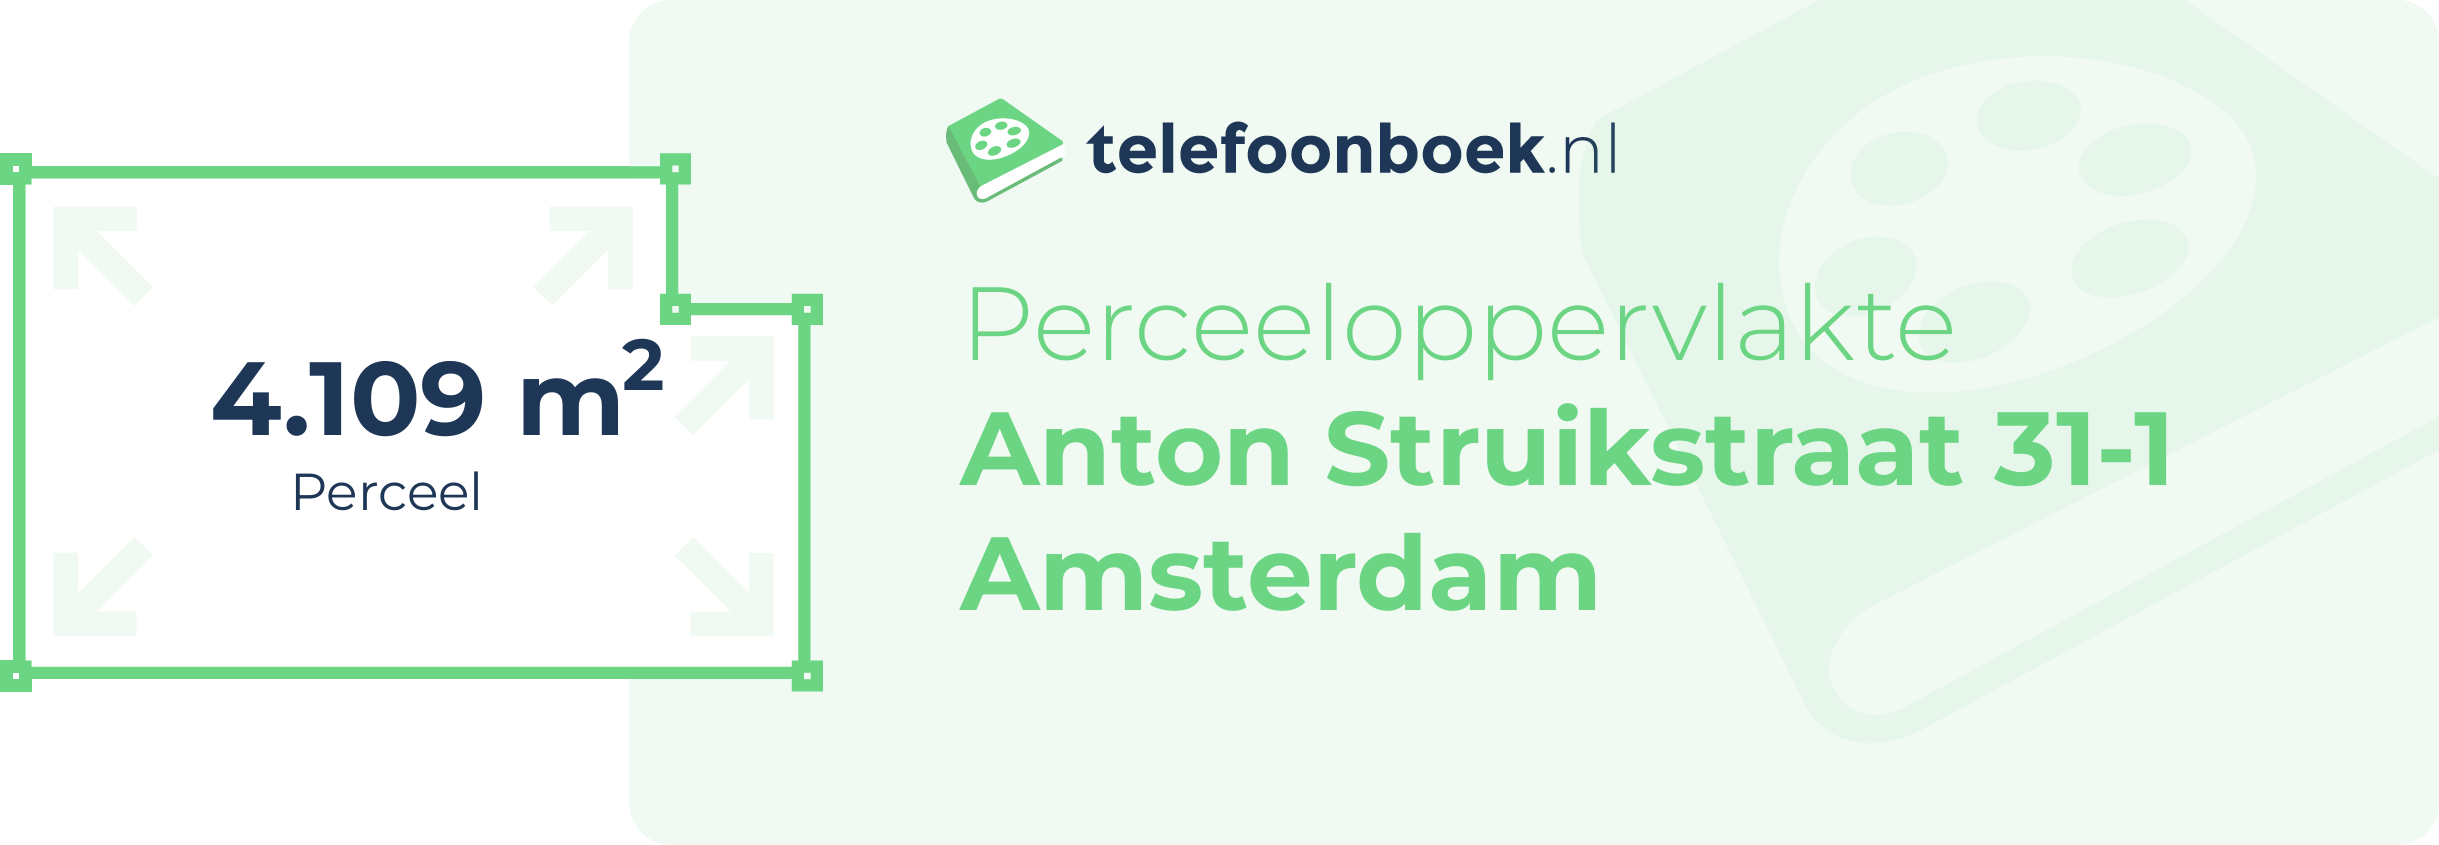 Perceeloppervlakte Anton Struikstraat 31-1 Amsterdam